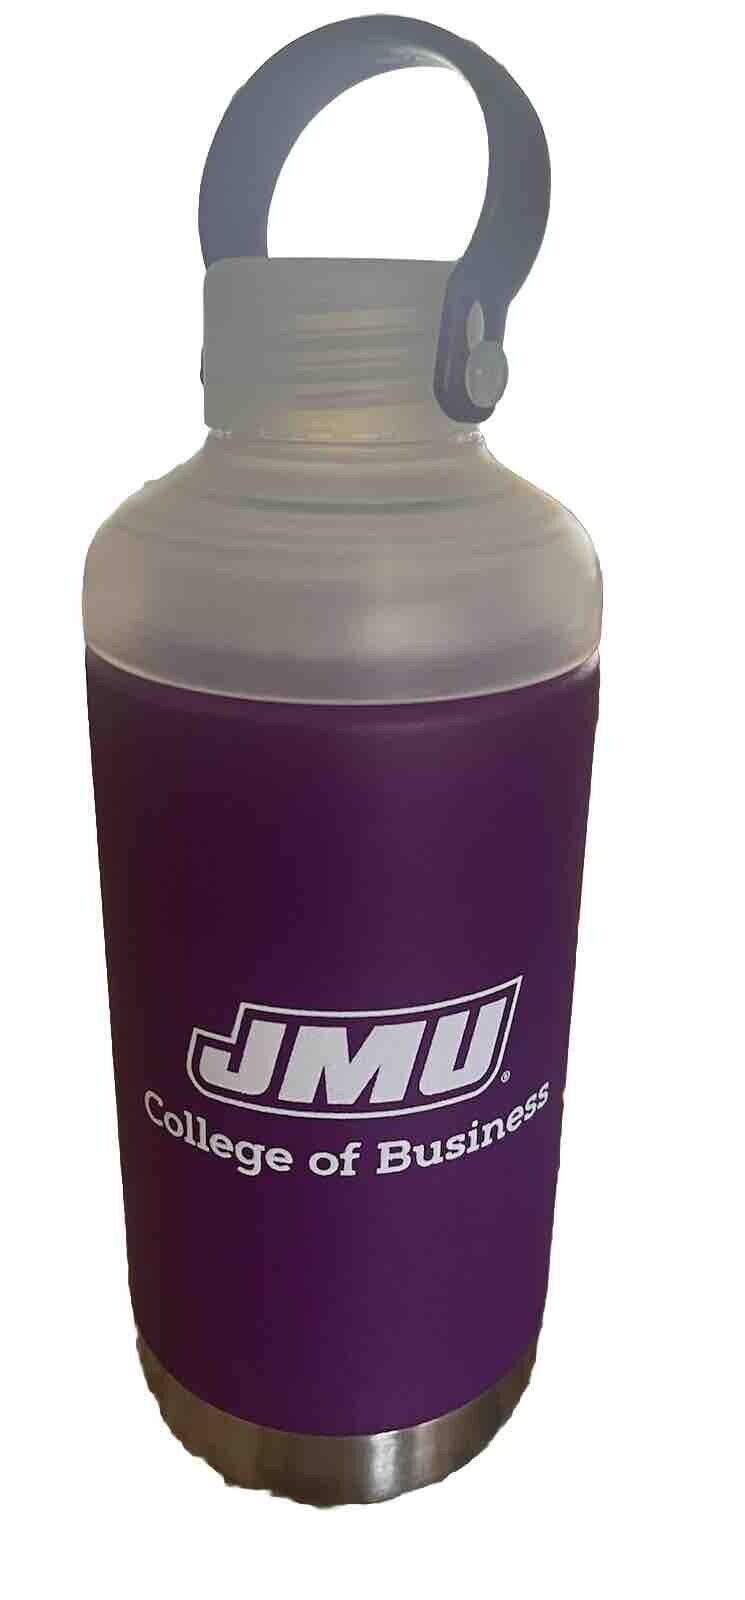 JMU James Madison University College Of Business Water Bottle New